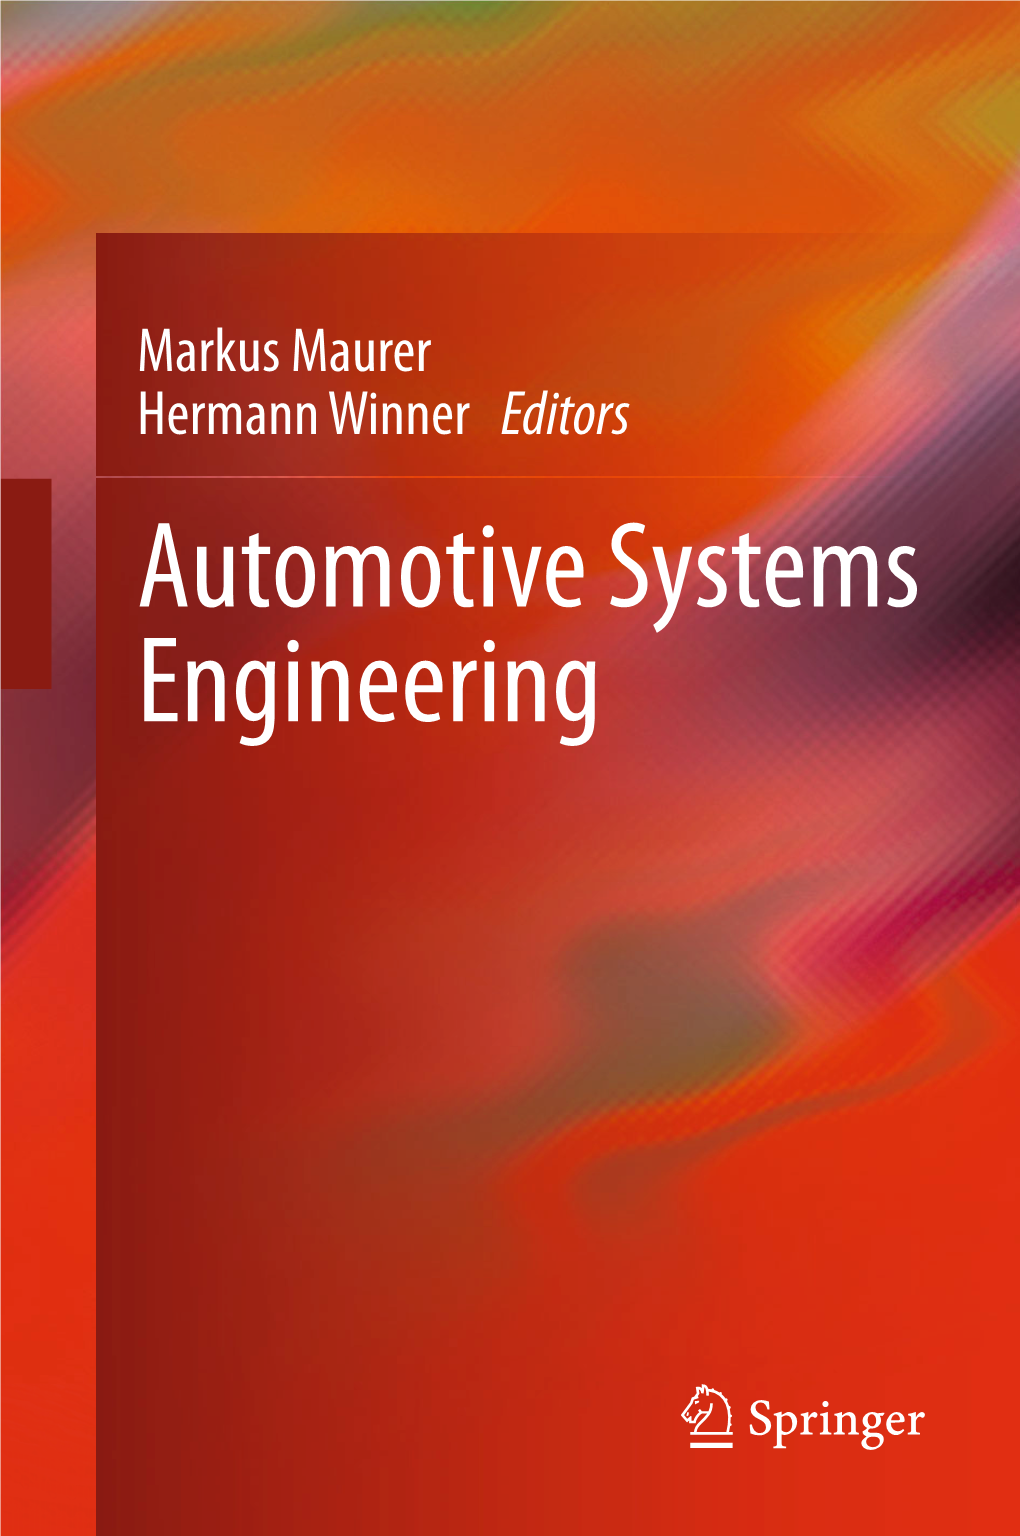 Automotive Systems Engineering Automotive Systems Engineering Markus Maurer • Hermann Winner Editors